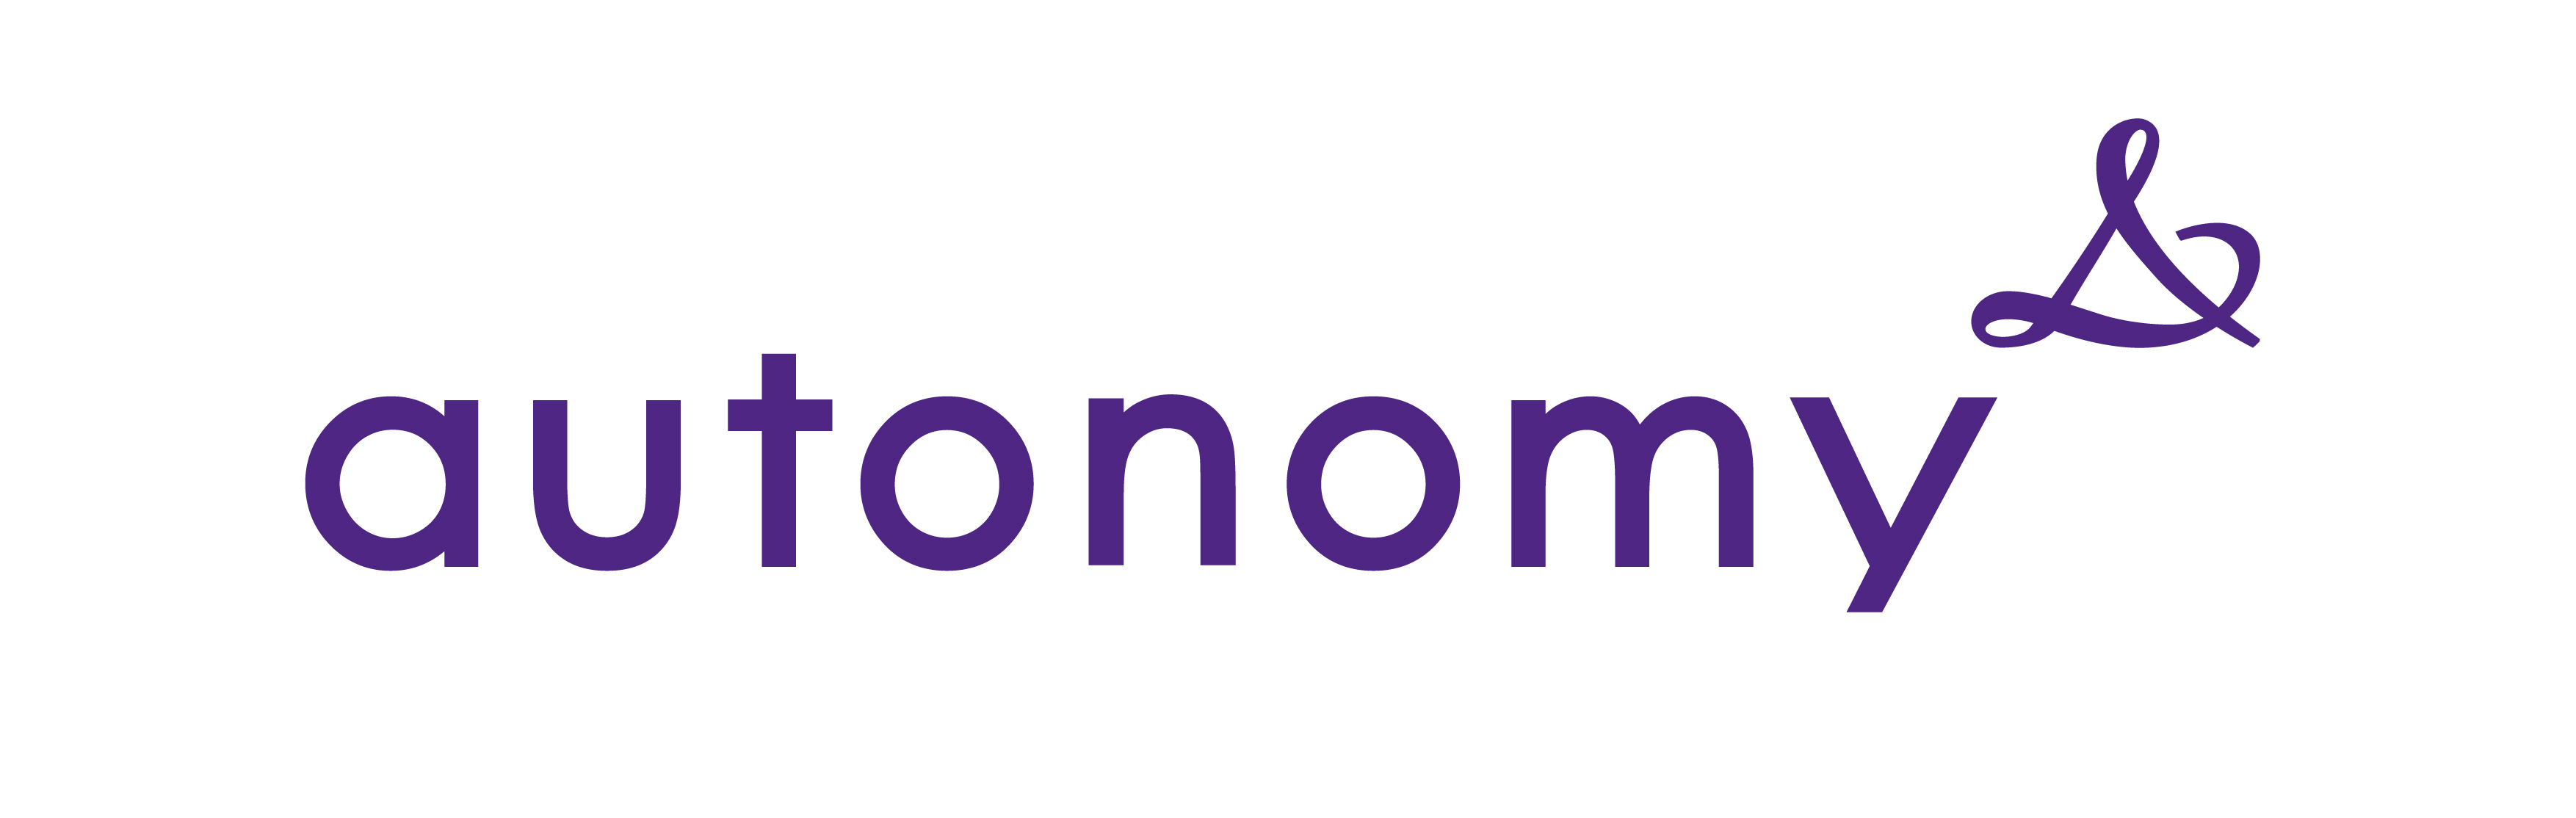 logo for Autonomy Healthcare